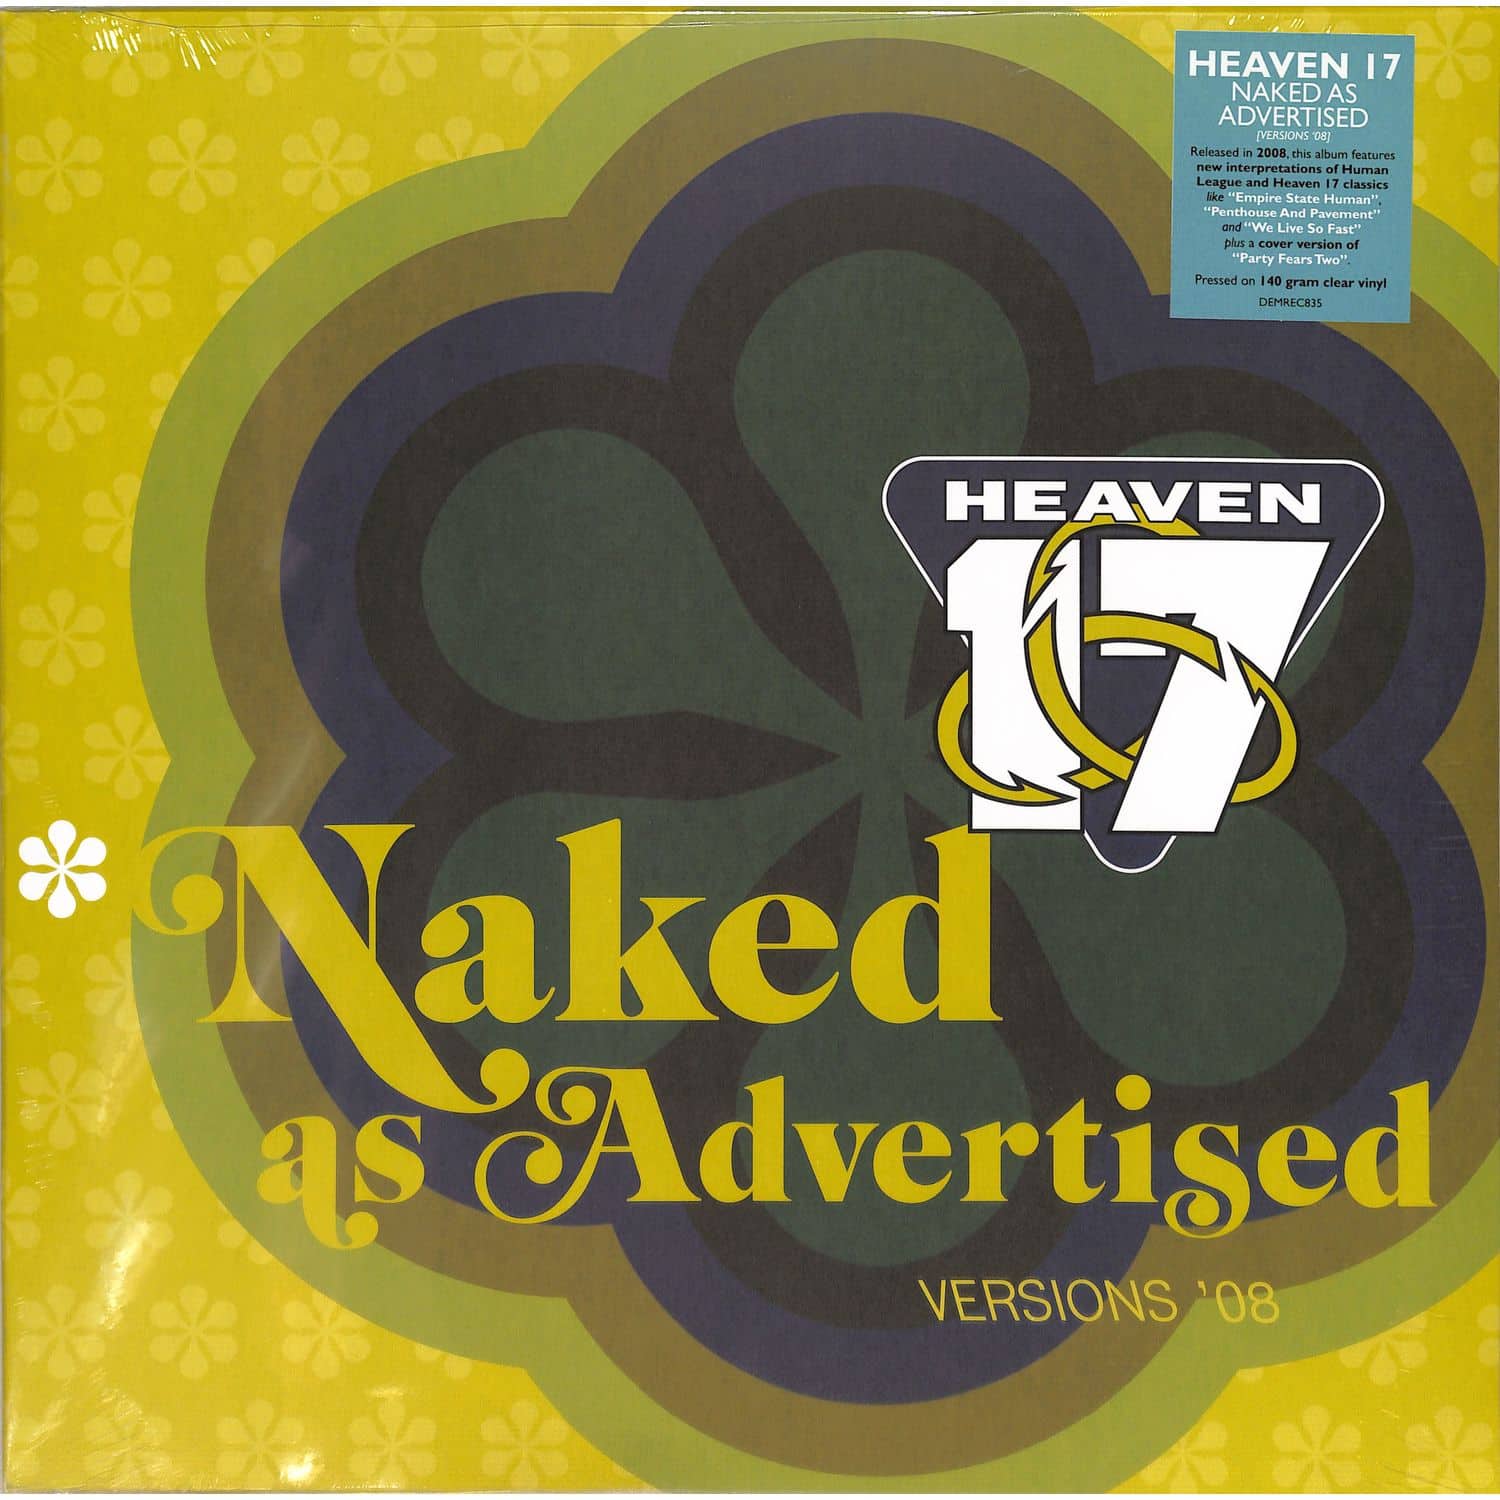 Heaven 17 - NAKED AS ADVERTISED 